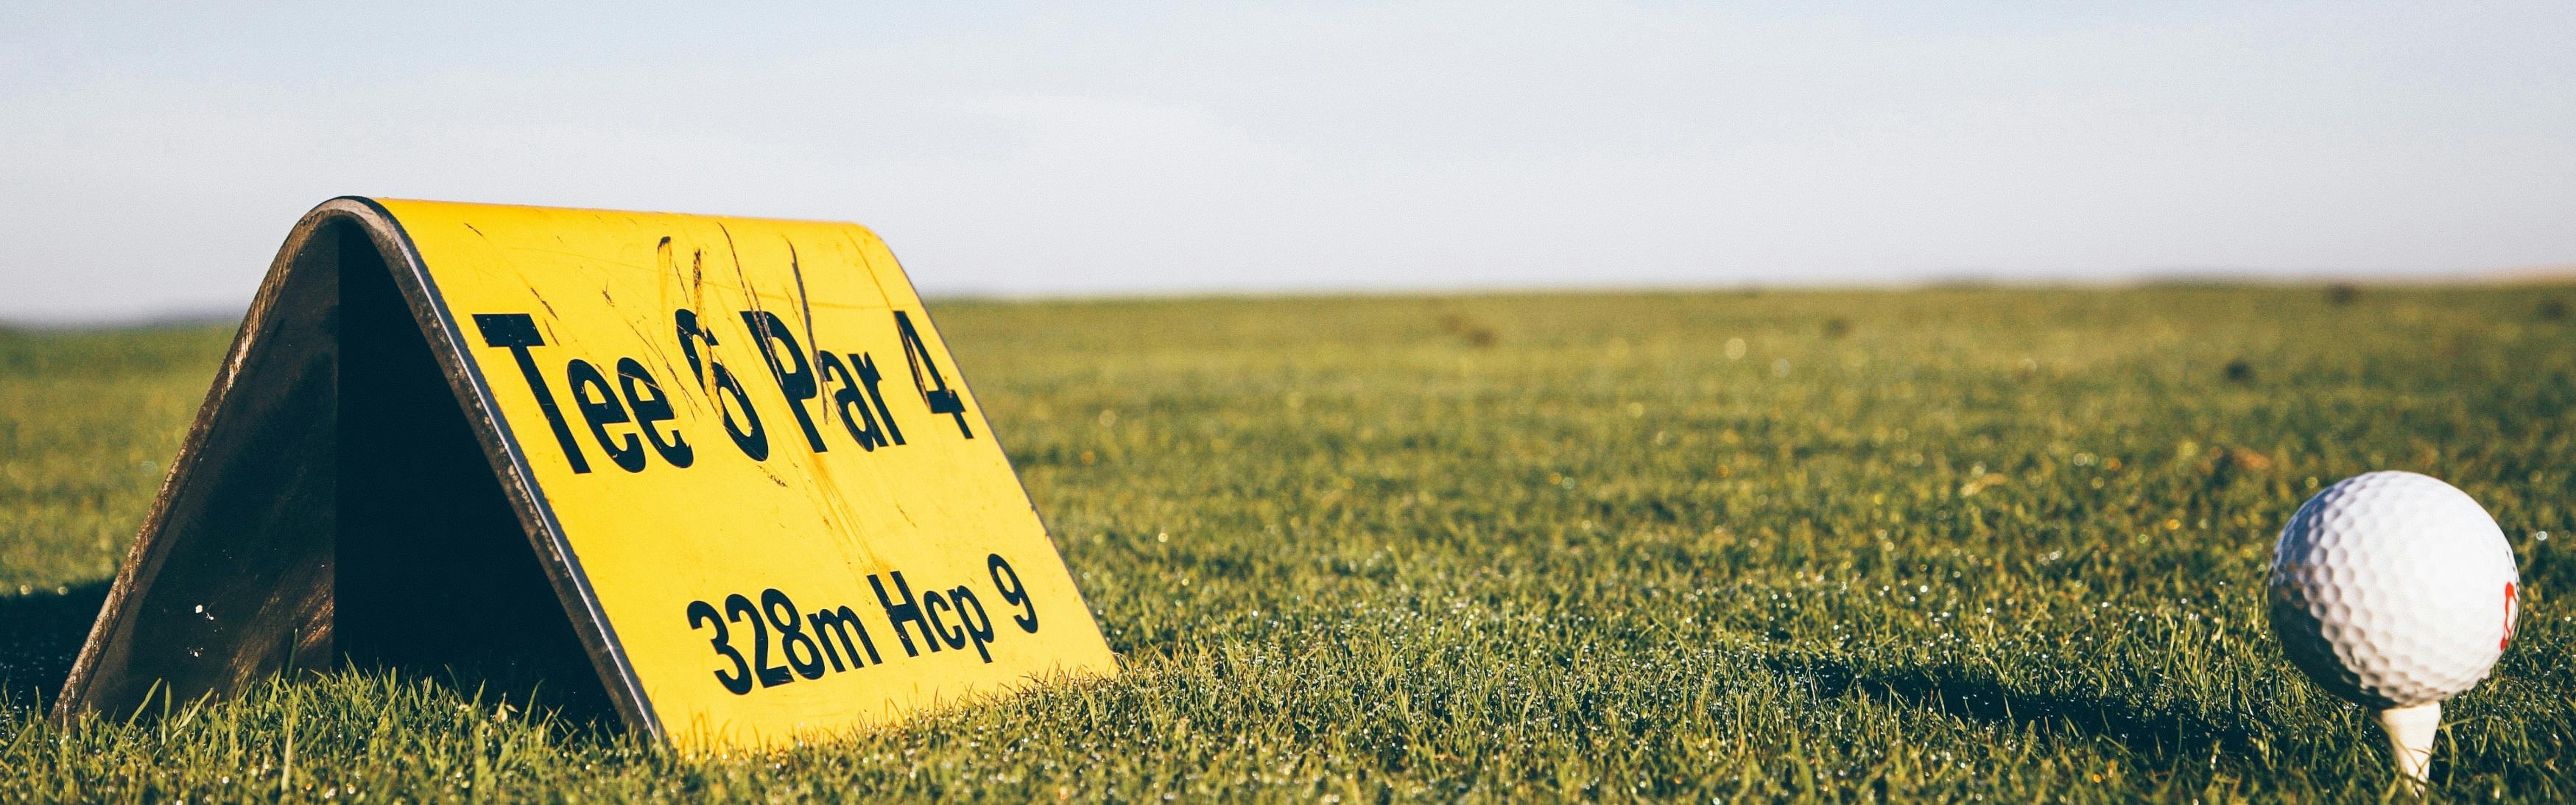 A sign describing a tee and par sits on the grass